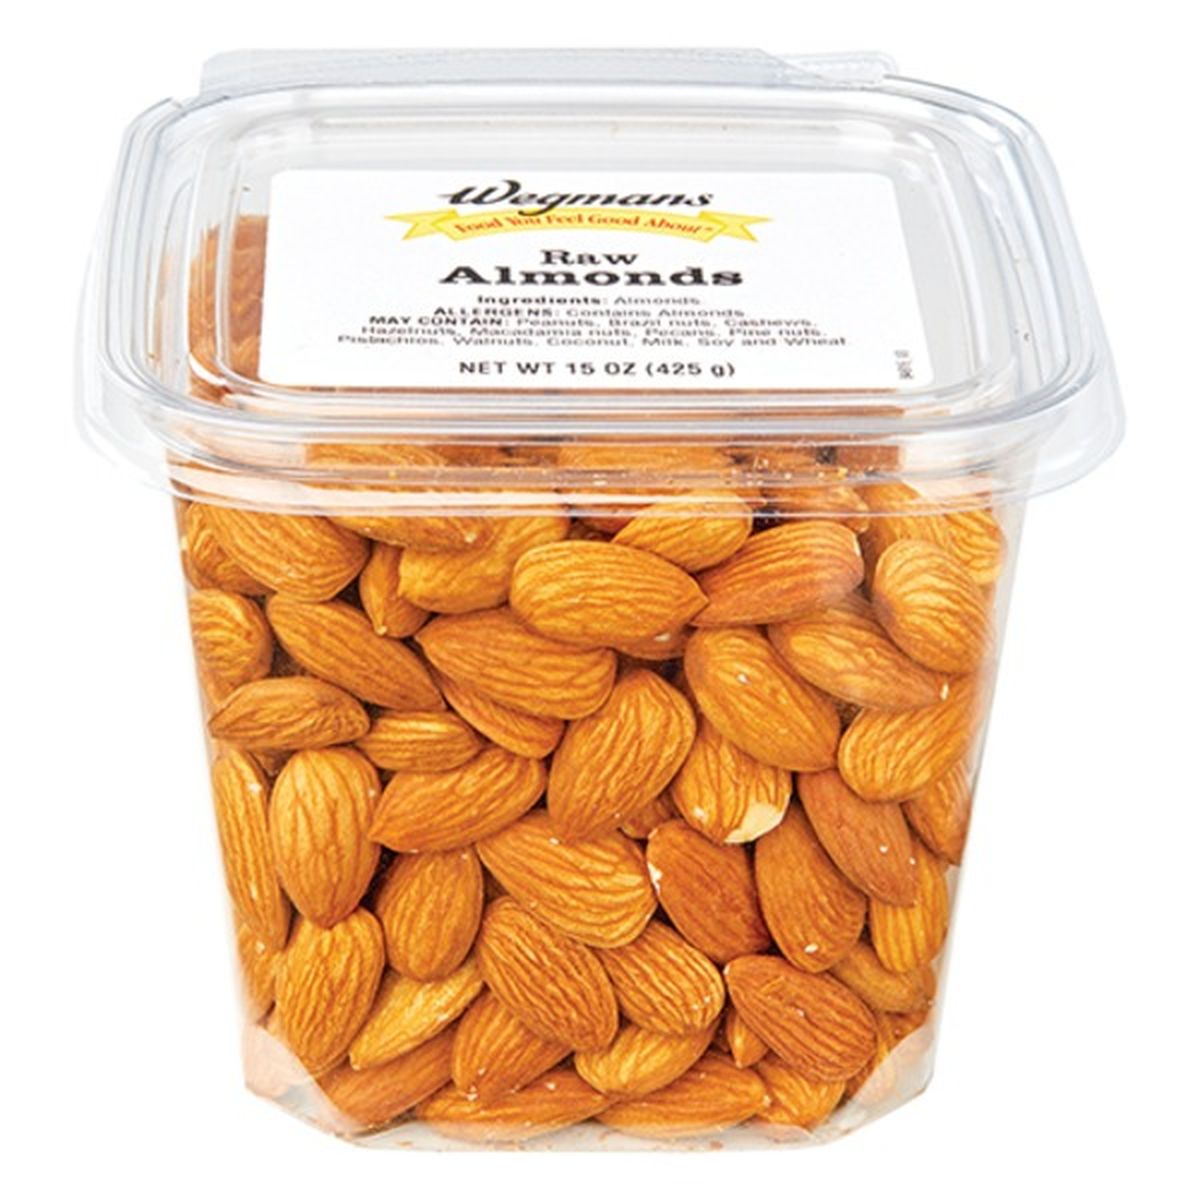 Calories in Wegmans Raw Almonds